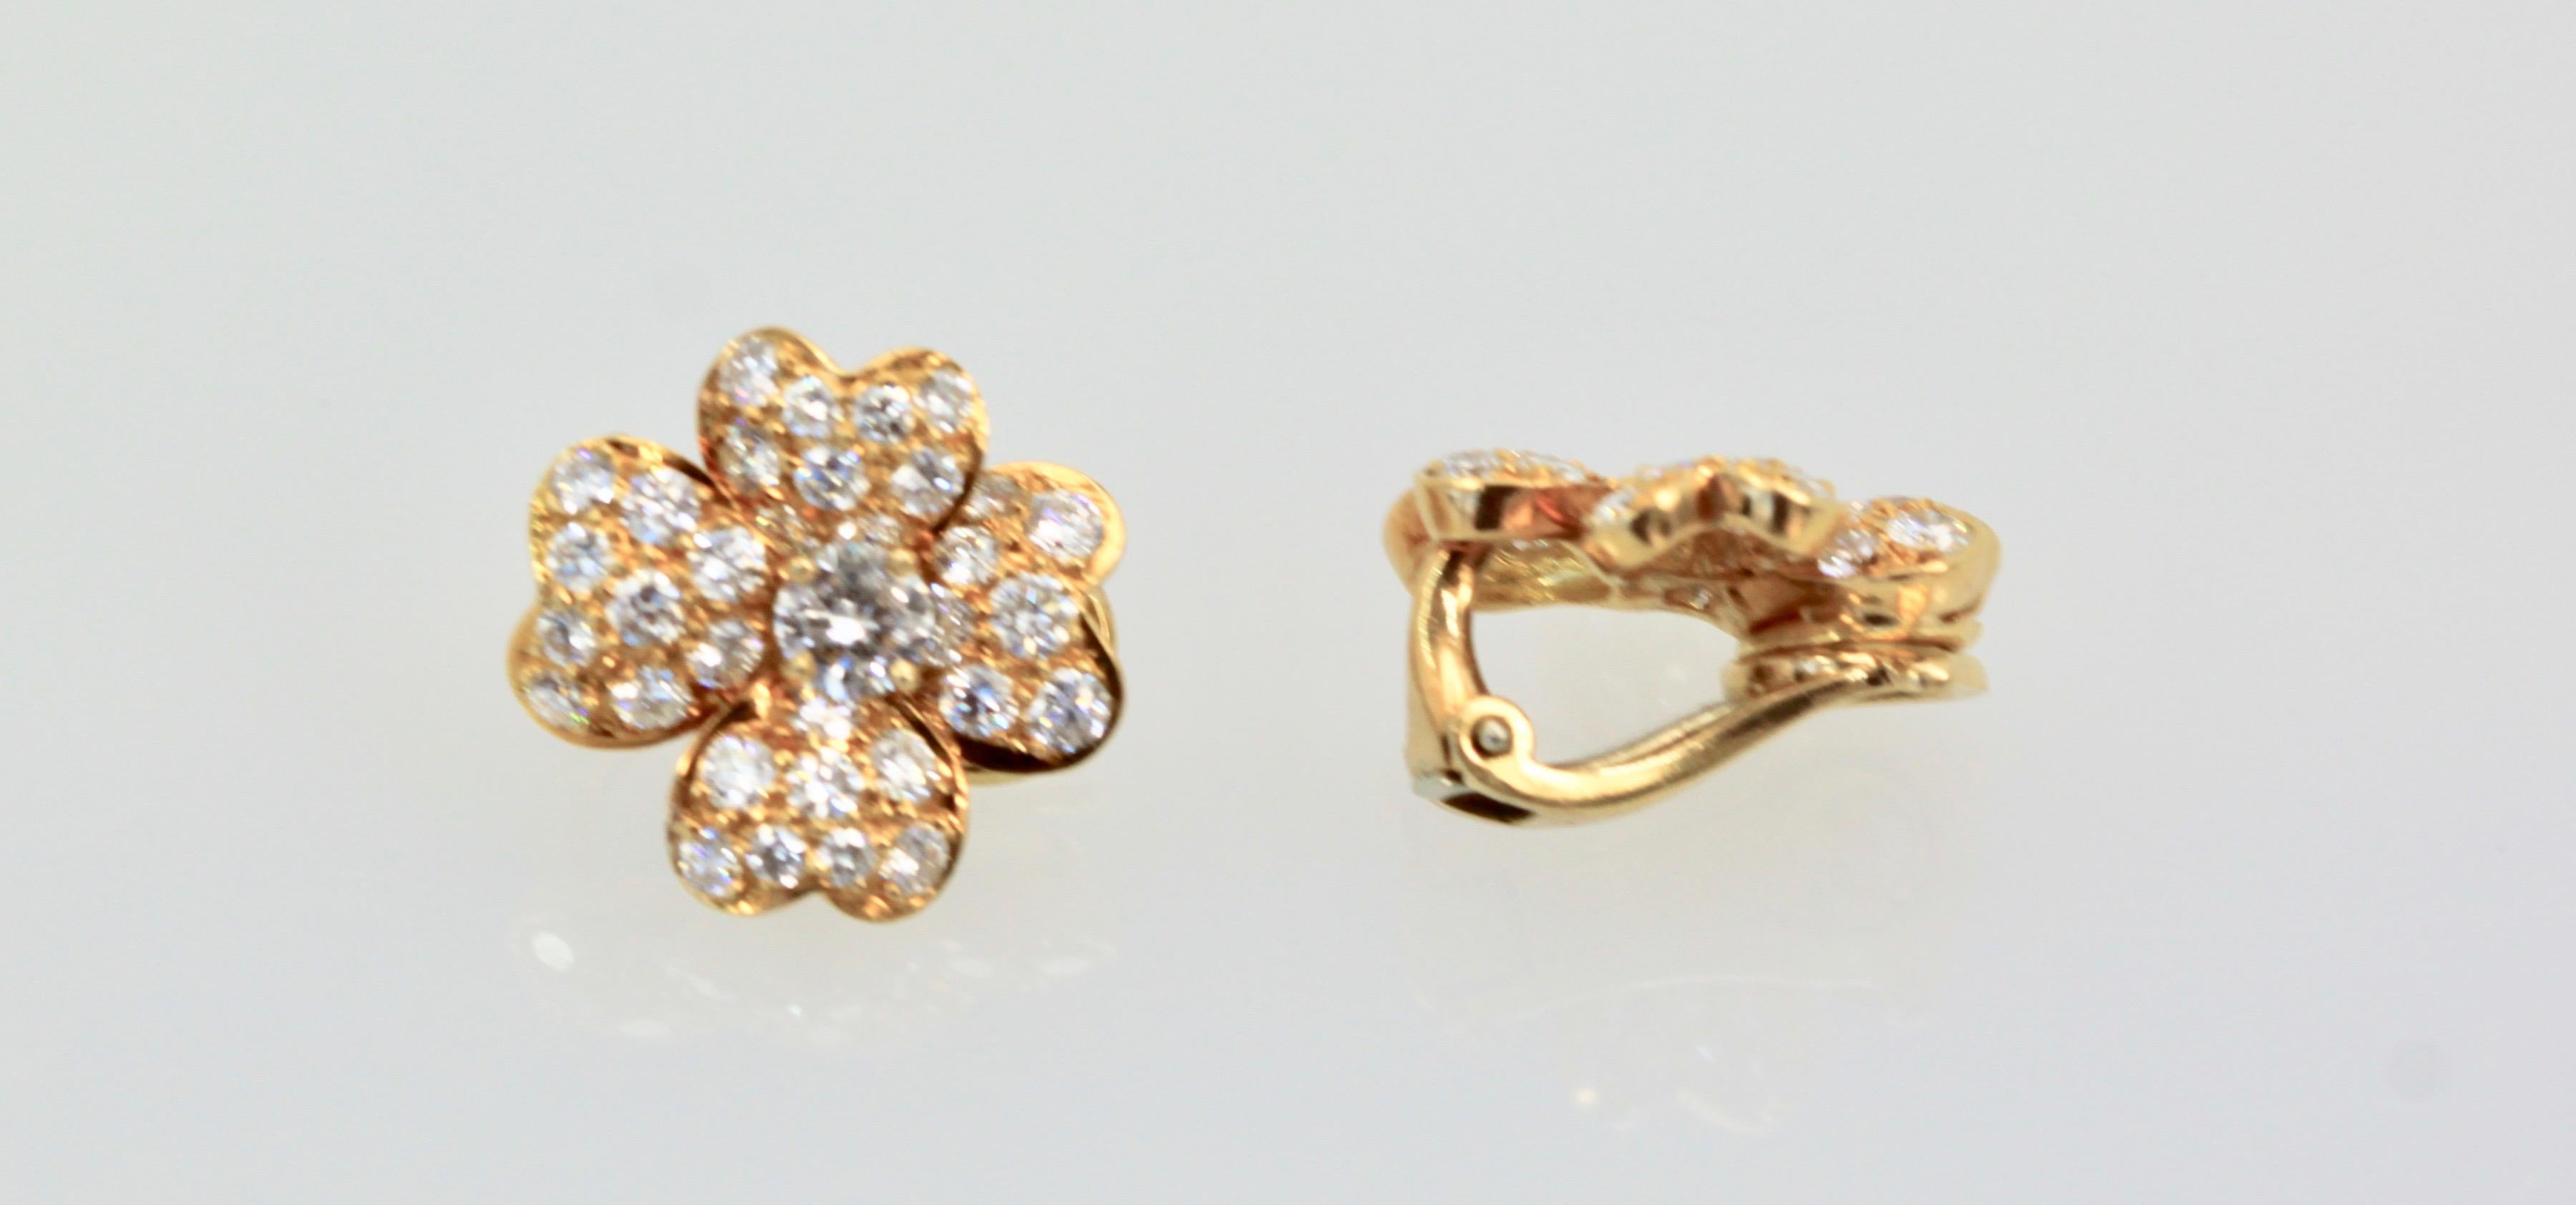 Round Cut Van Cleef Cosmos Diamond Earrings Small 18 Karat Yellow Gold